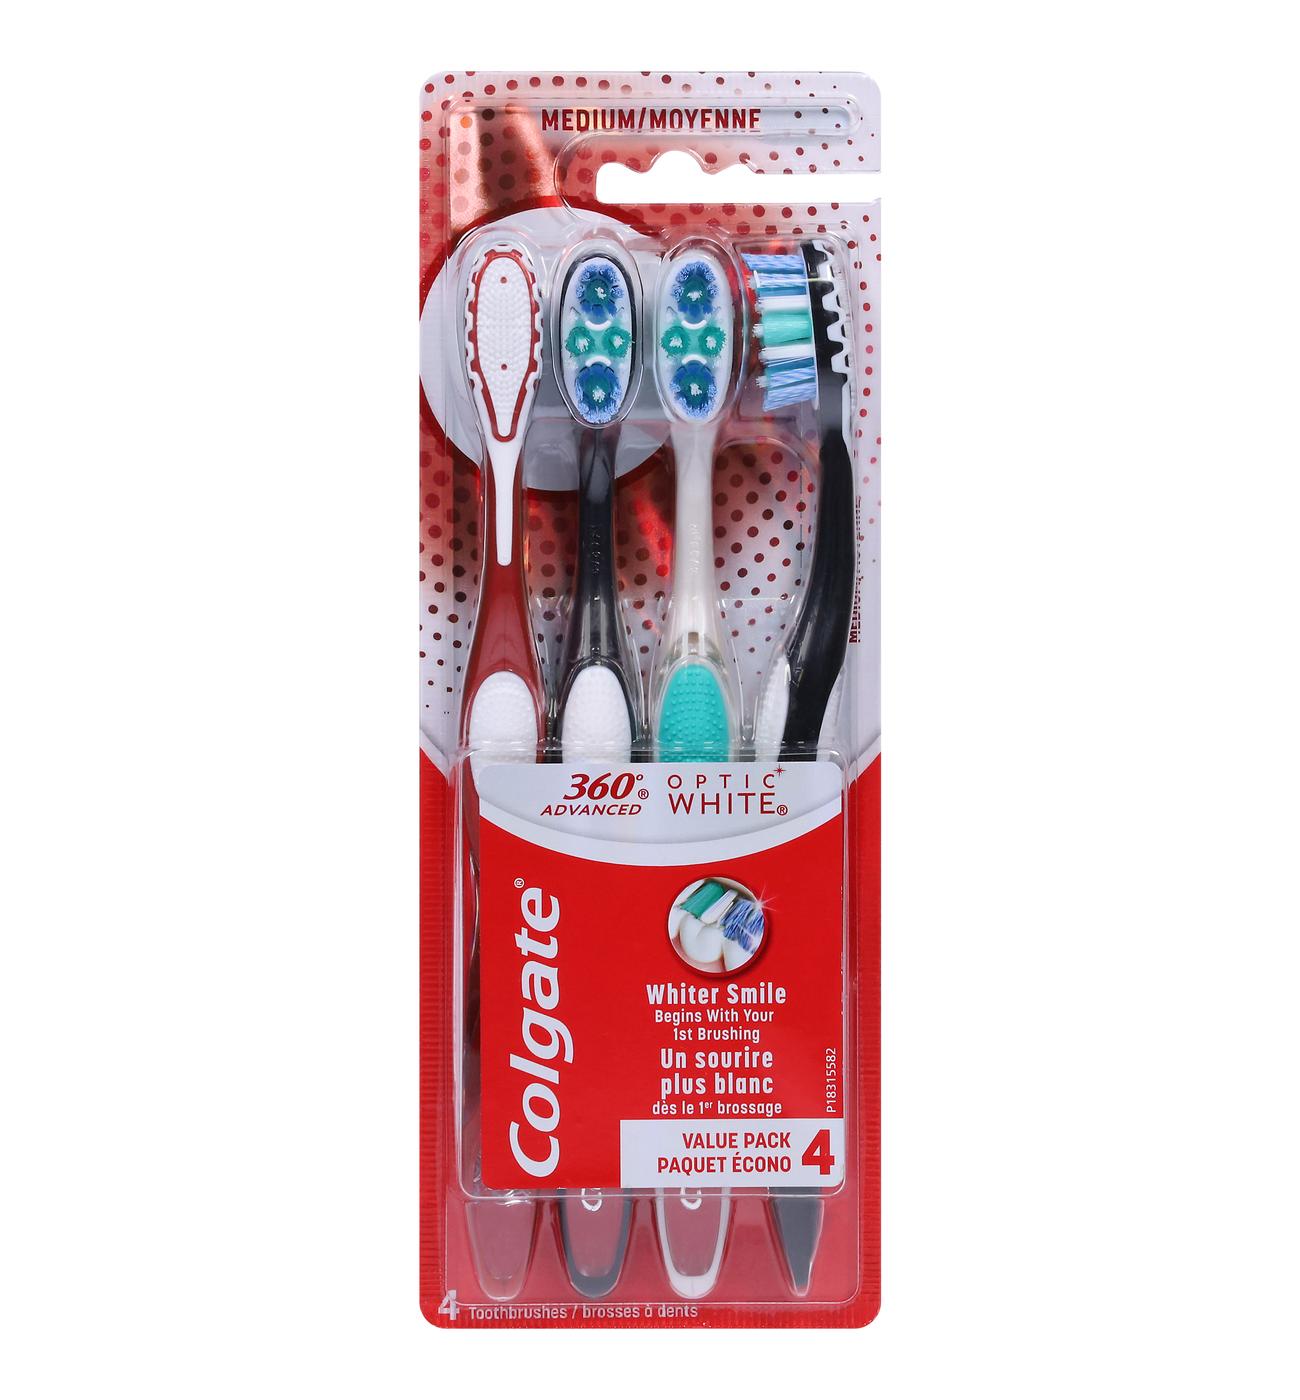 Colgate 360⁰ Advanced Optic White Toothbrushes - Medium; image 1 of 9